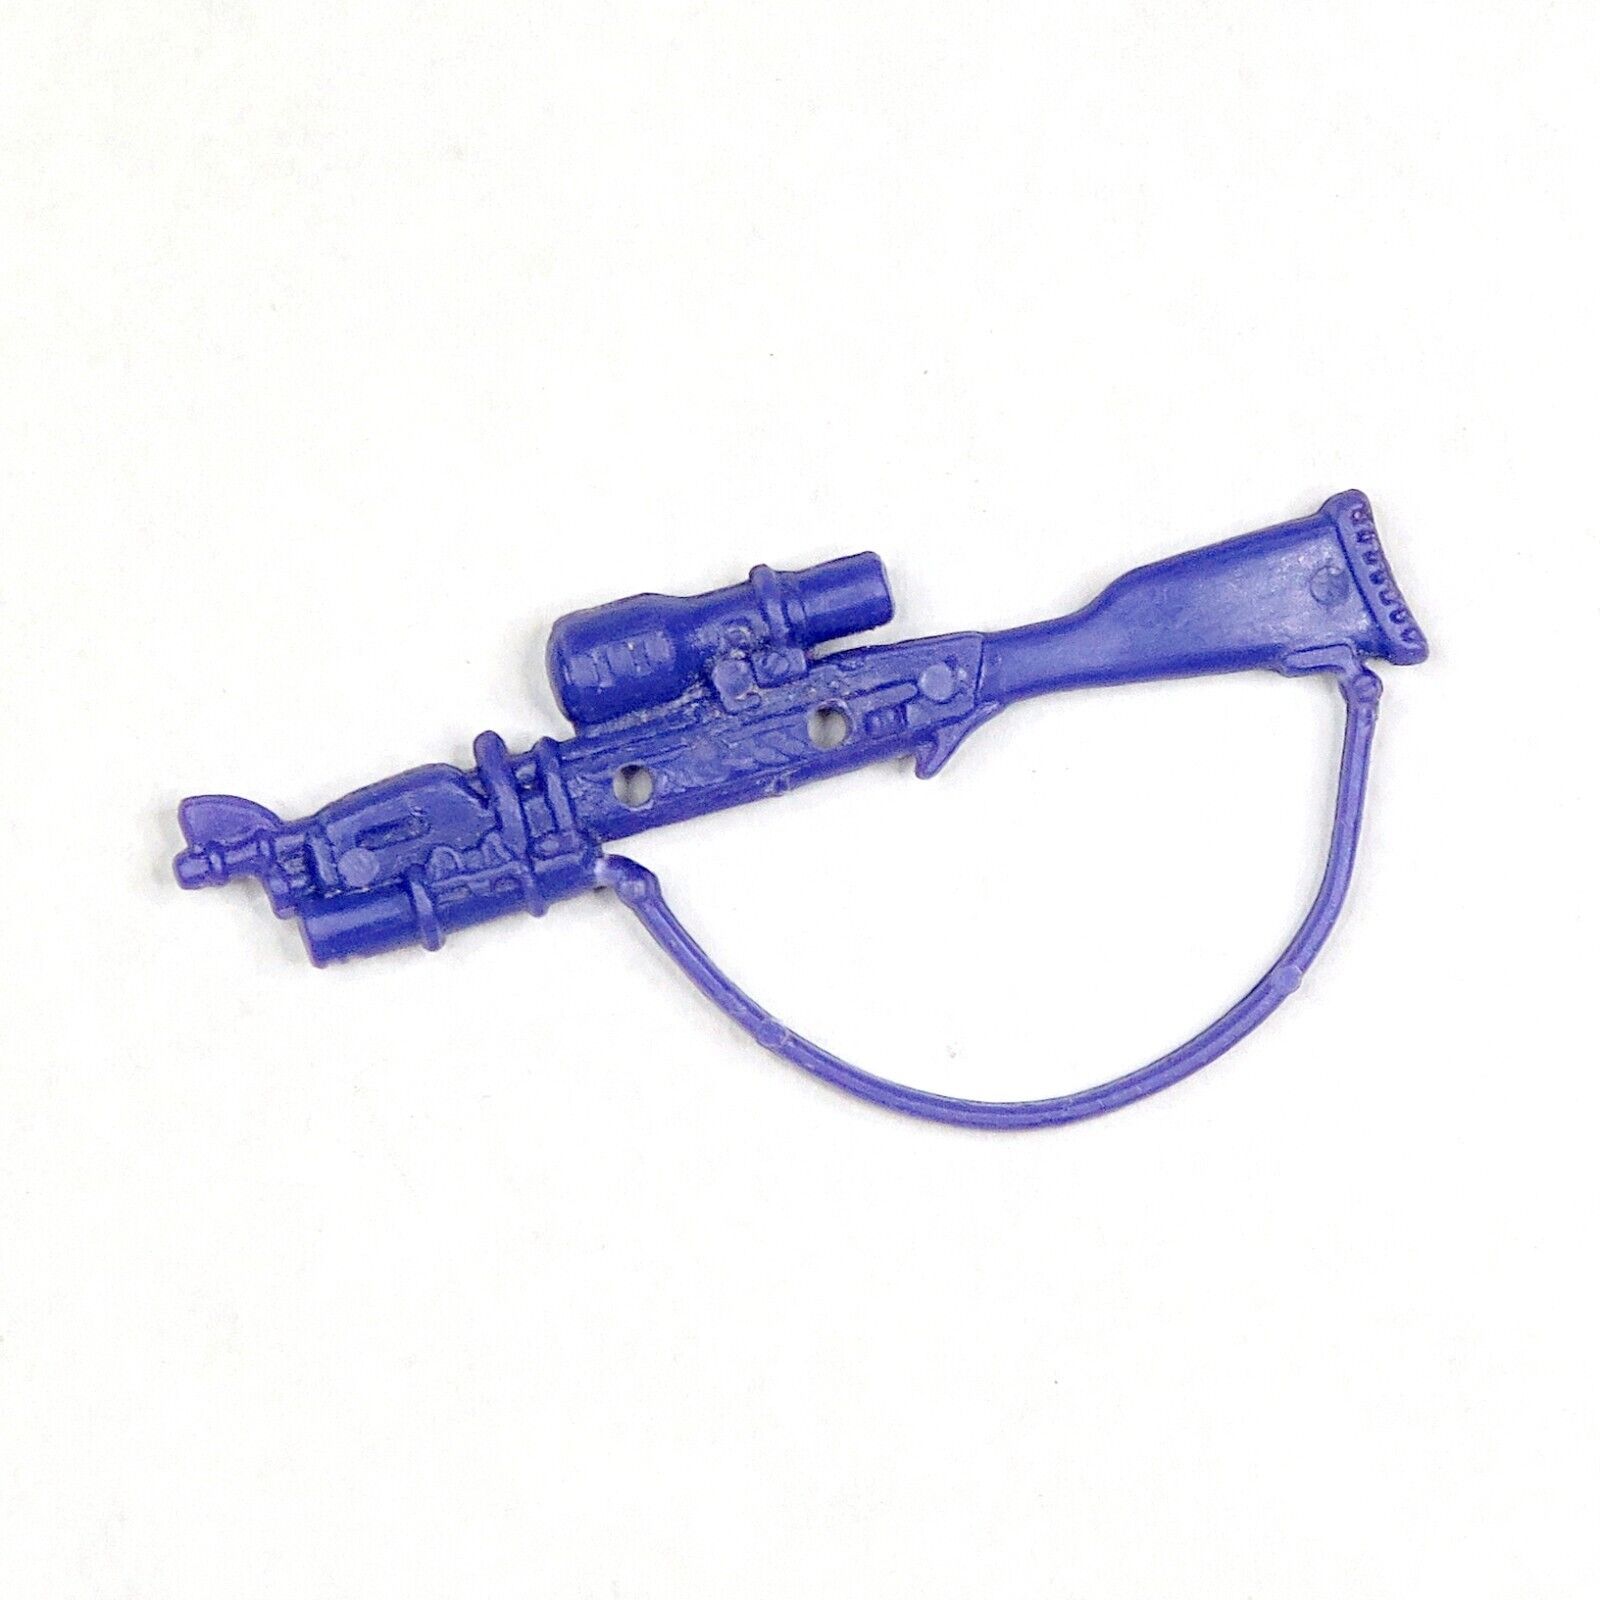 Primary image for GI Joe Heli-Viper Purple Rifle Accessory 1992 1:18 Original Gun Weapon ARAH